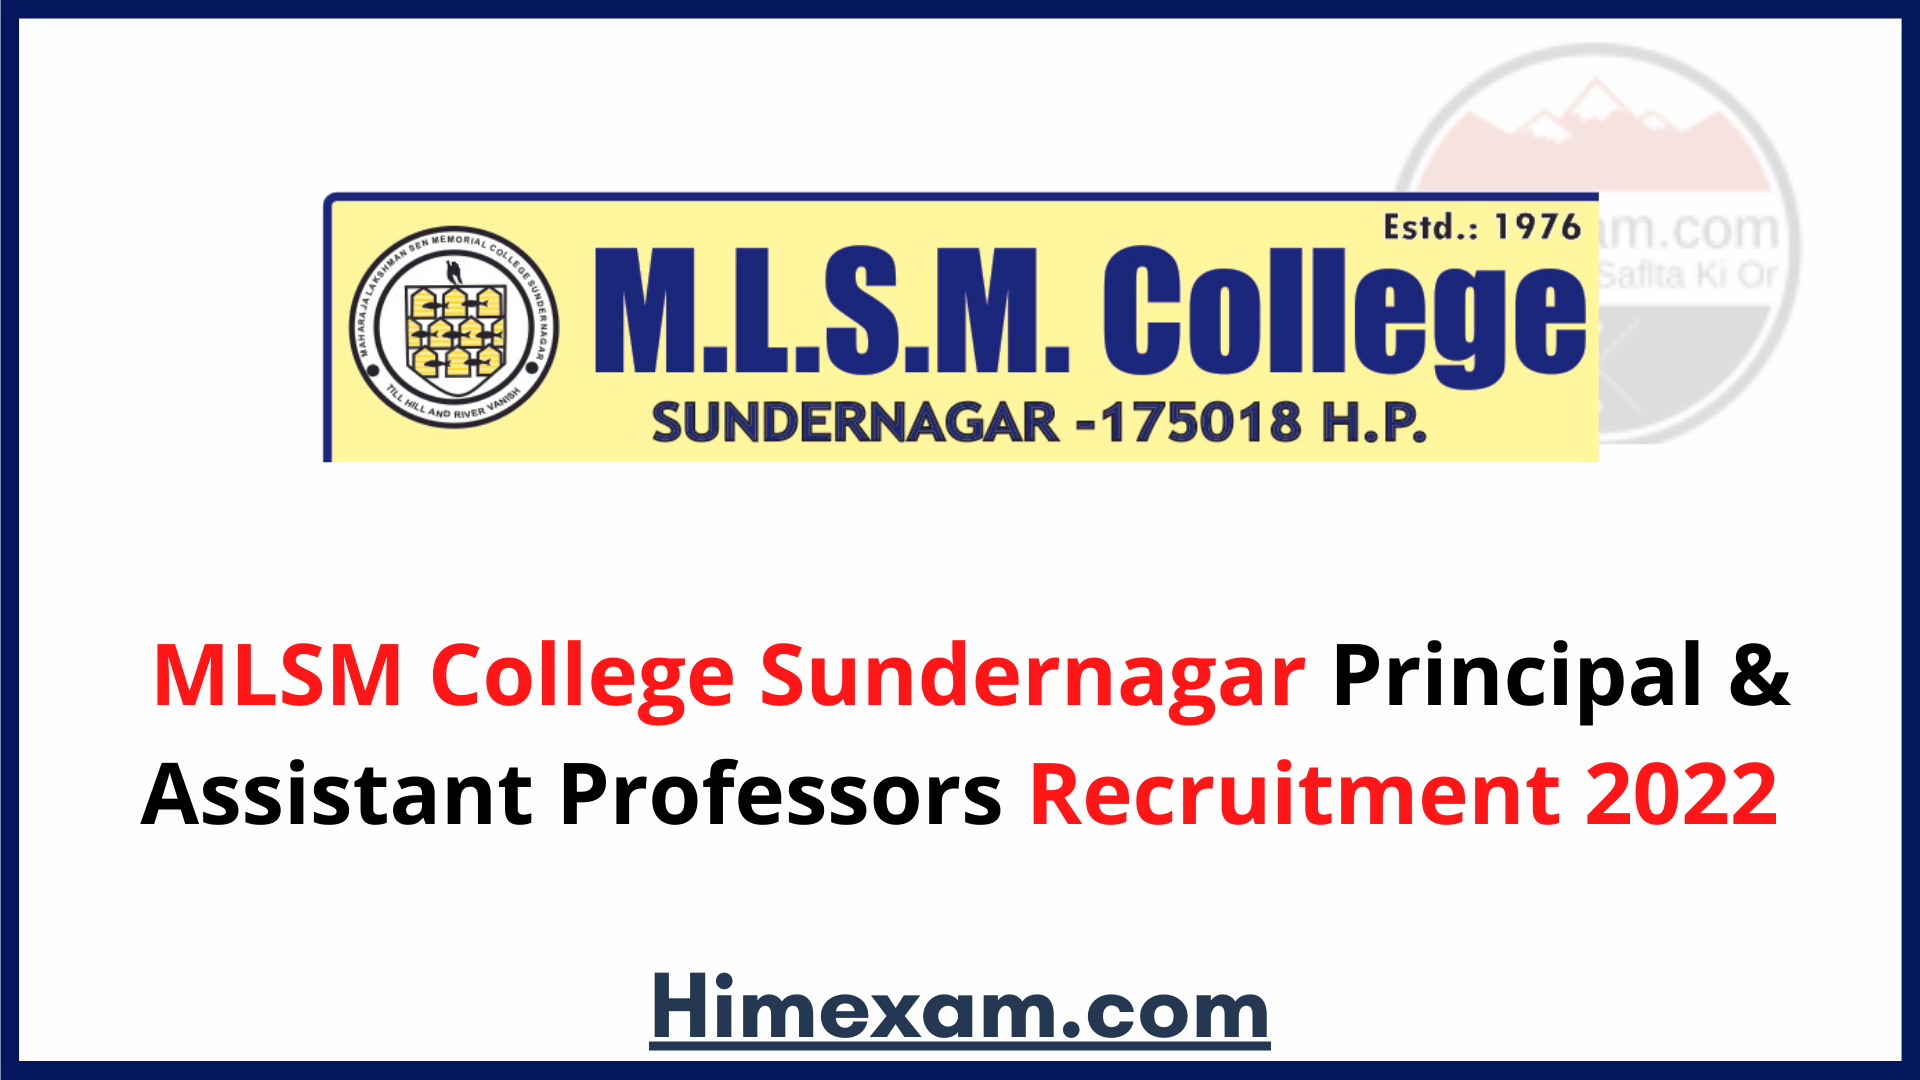 MLSM College Sundernagar Principal & Assistant Professors Recruitment 2022